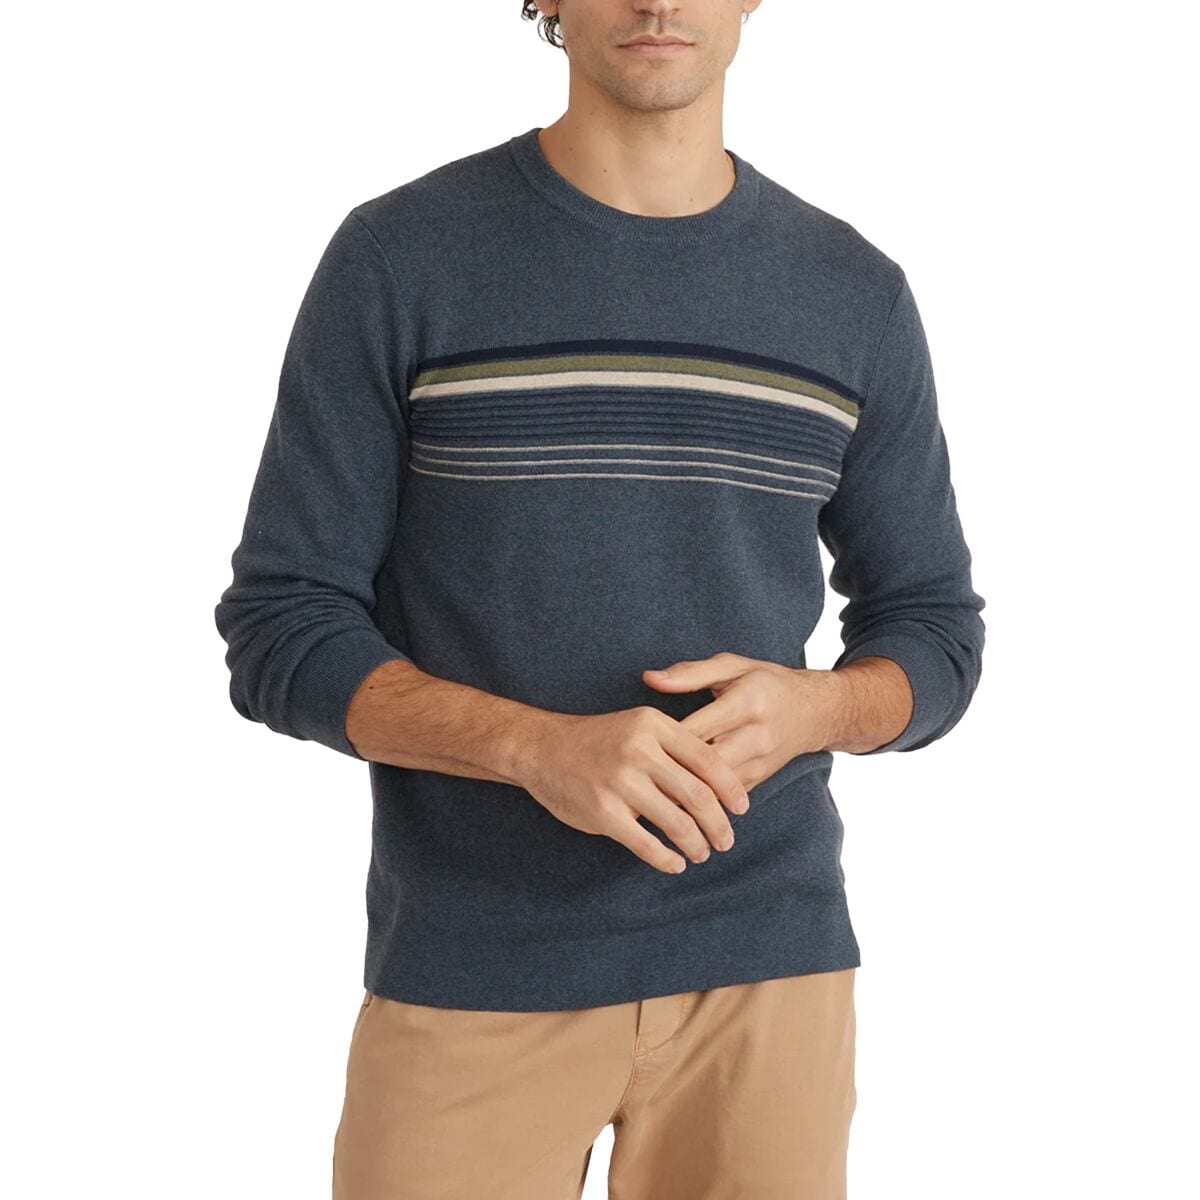 Marine Layer Chest Stripe Sweater - Men's